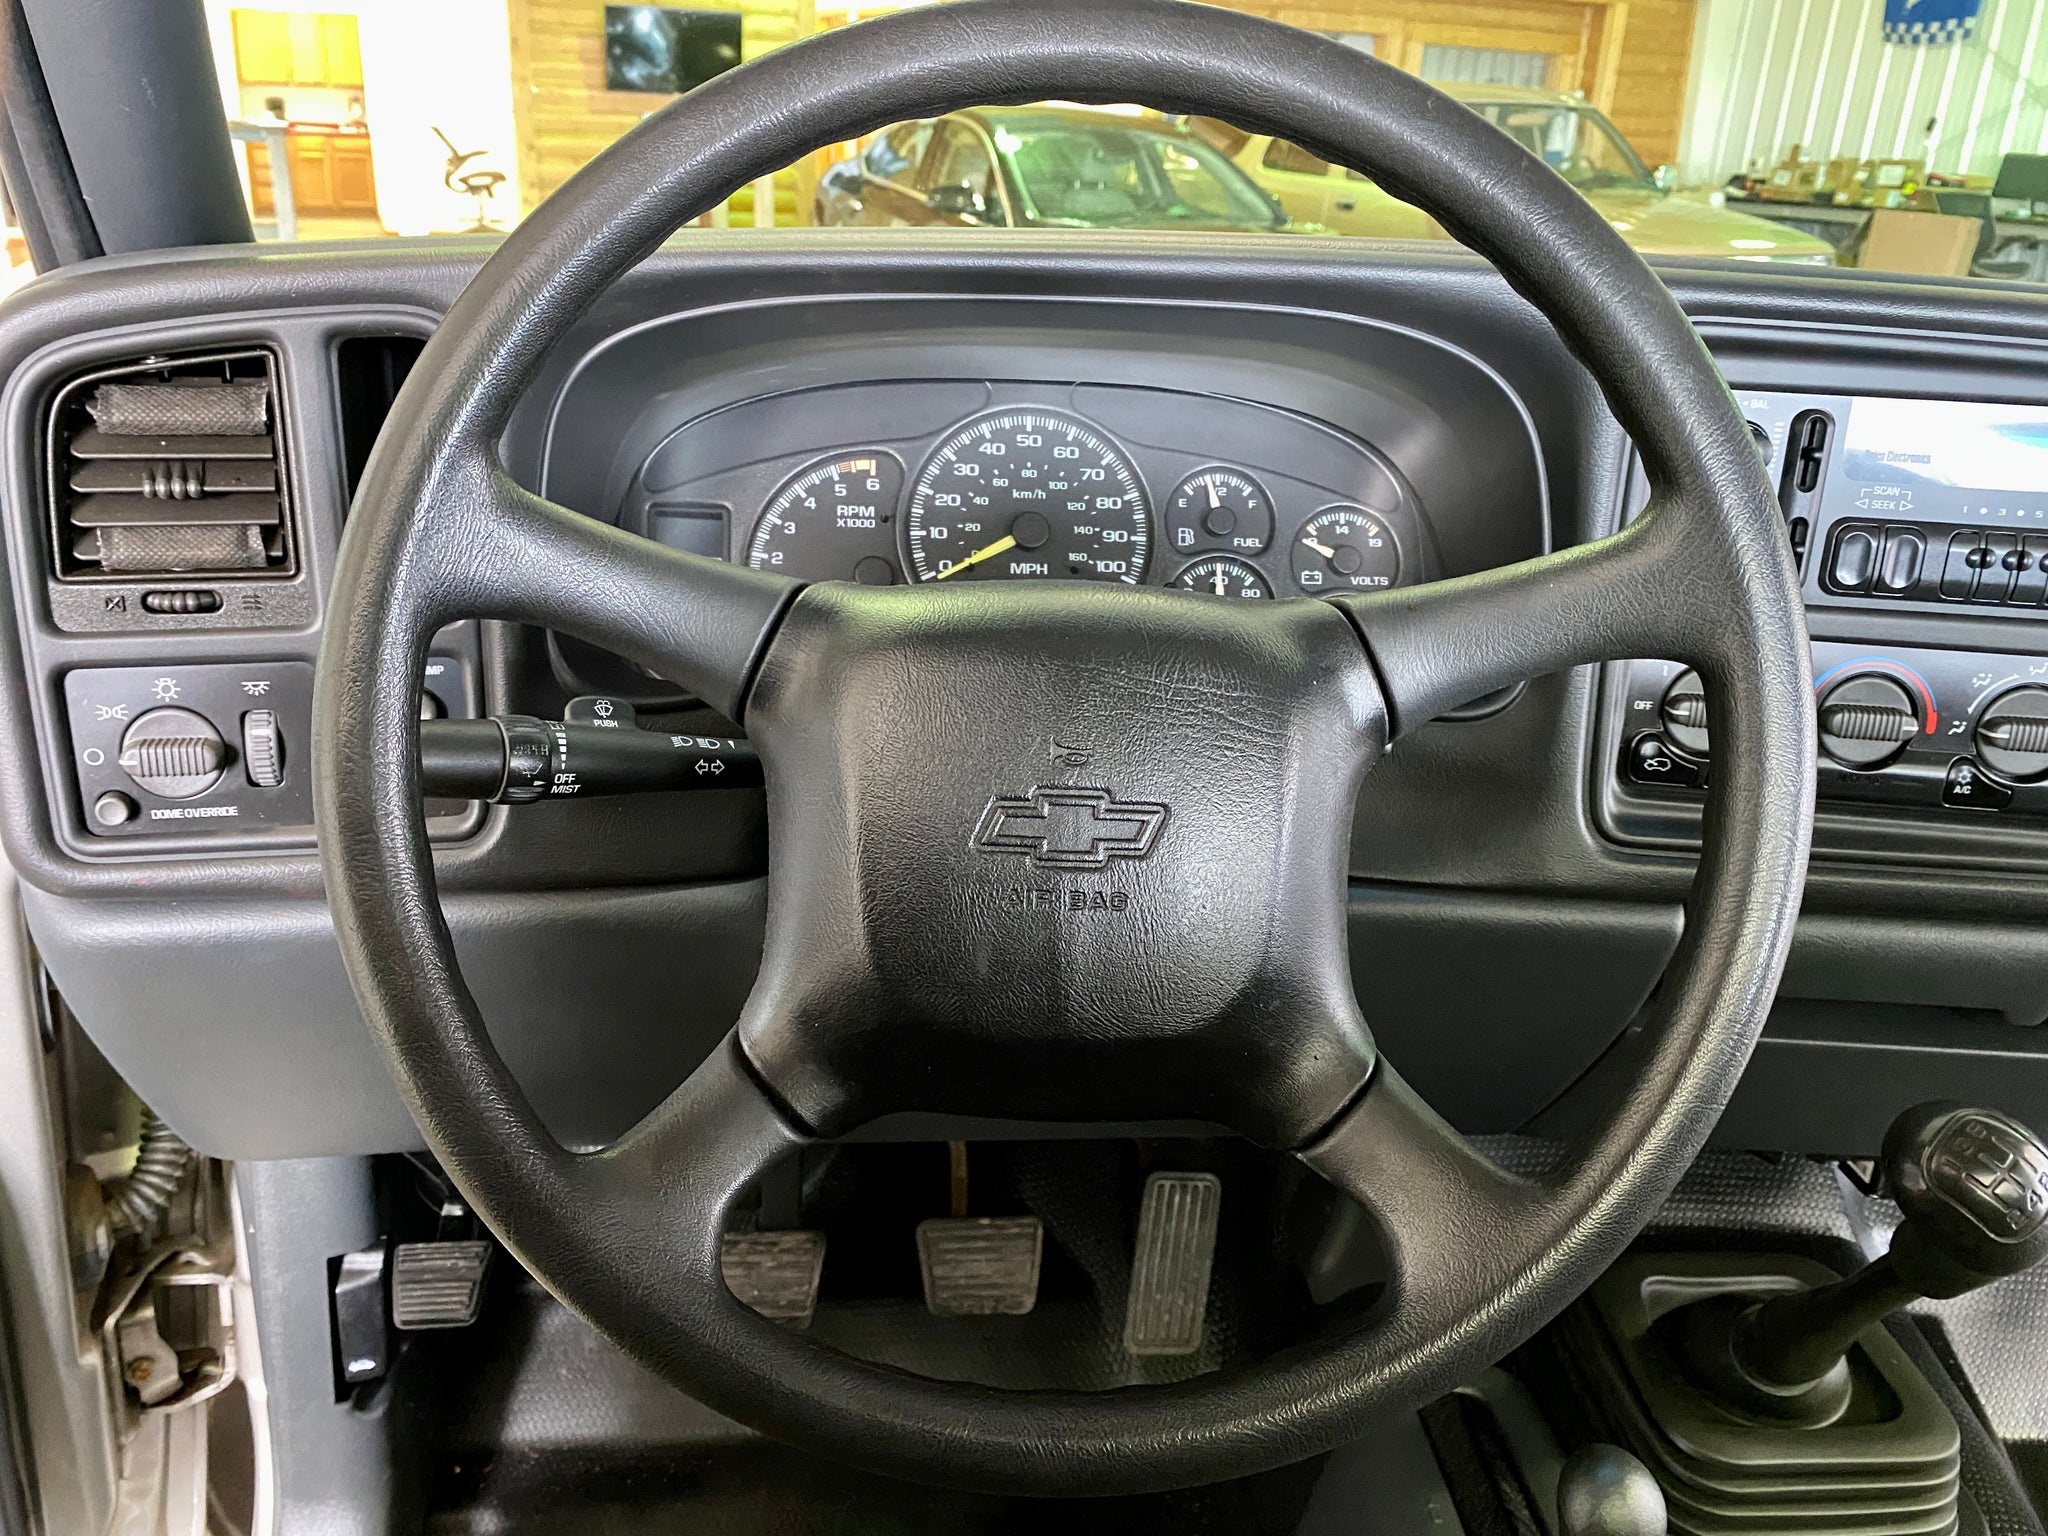 2000 Chevrolet Silverado 1500 V8 4WD Manual Transmission - ShiftedMN